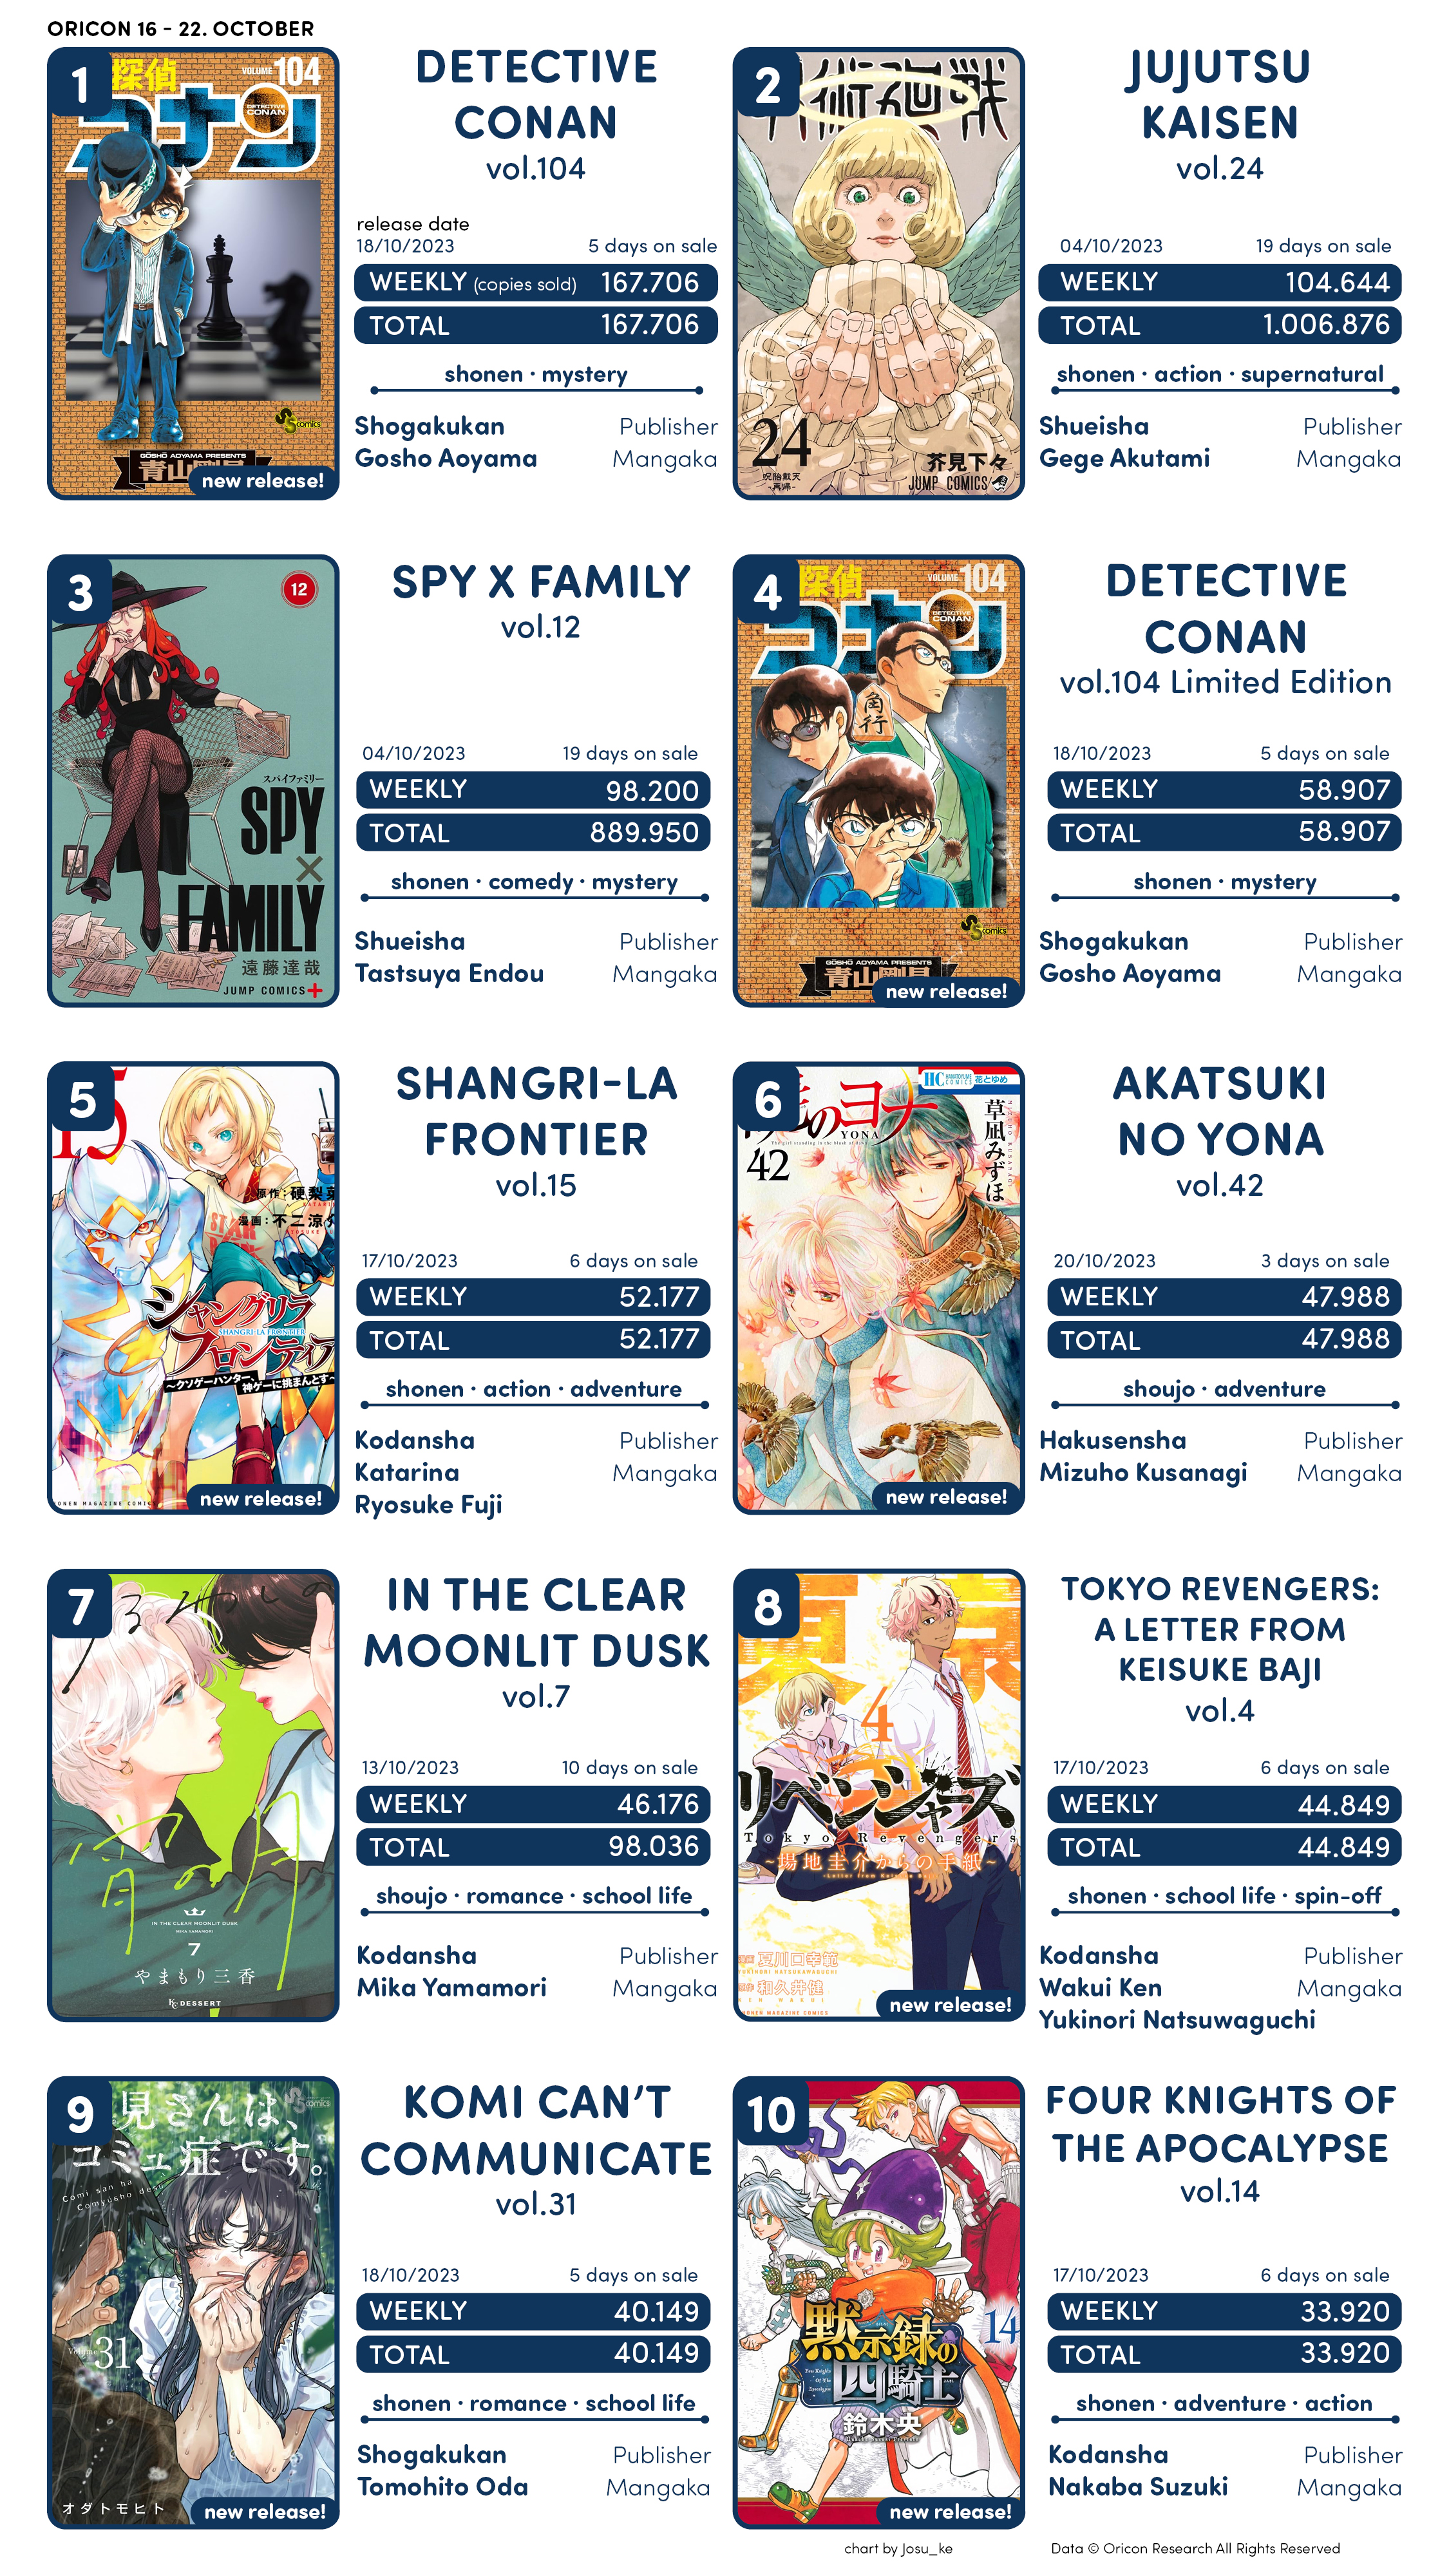 寿 三井 on X: TOP Best-Selling Light Novel Series 21-27 March